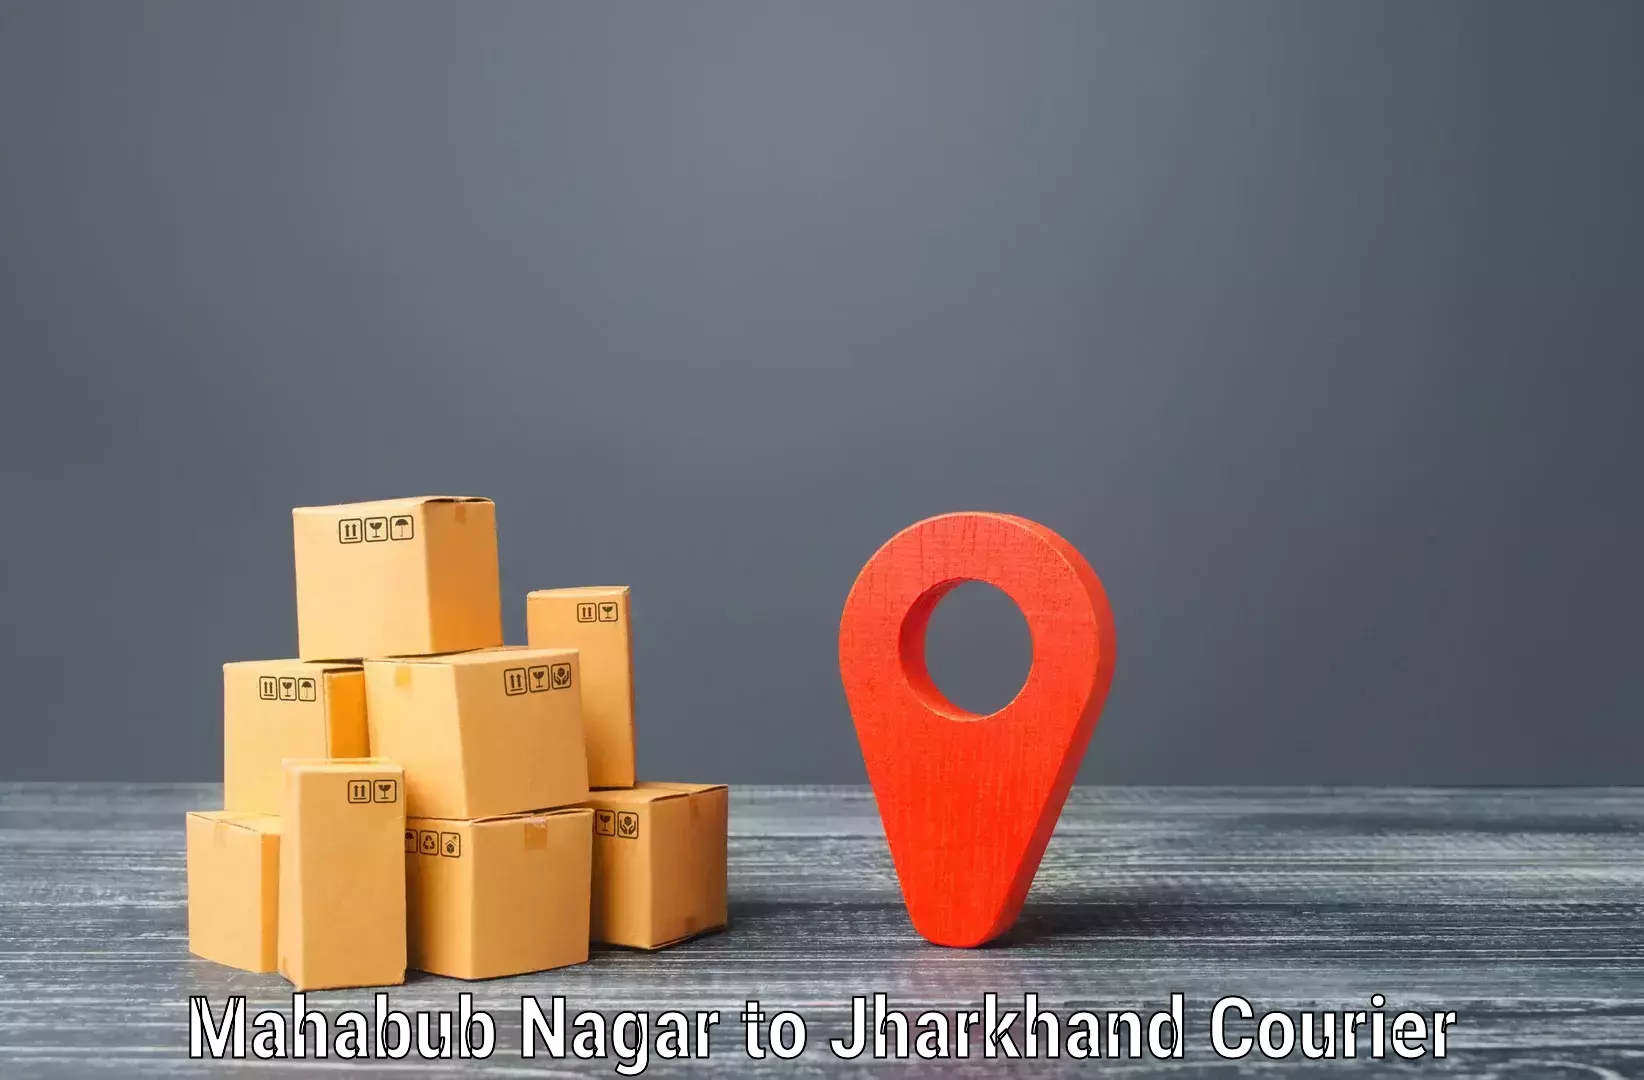 Seamless shipping experience Mahabub Nagar to Koderma